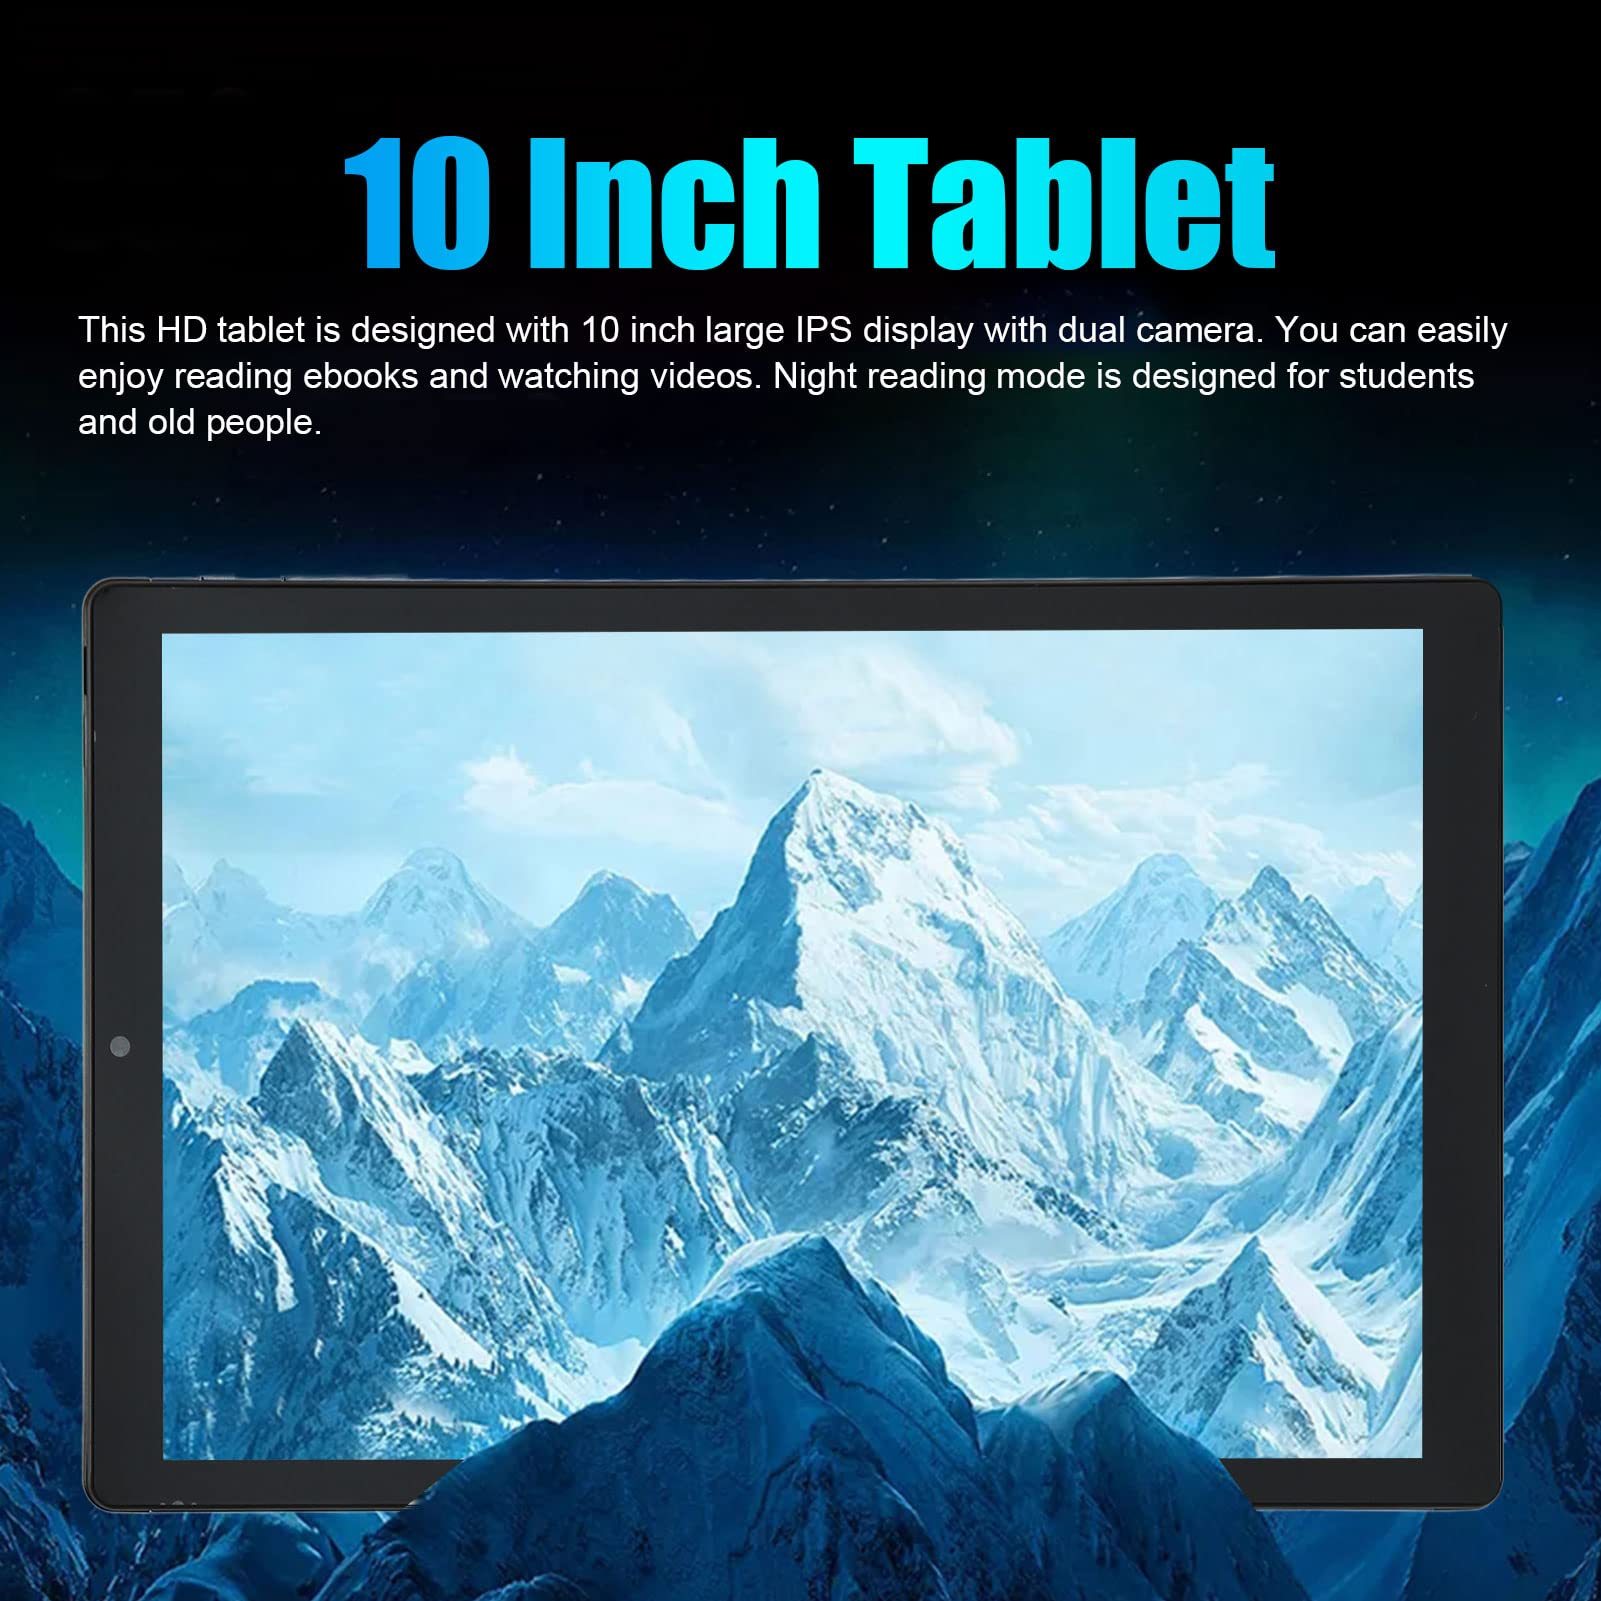 Vikye HD Tablet, 10 Inch HD IPS Display Tablet, 2.4G/5G Dual Band WiFi Gaming Tablet Octa Core 4GB RAM 64GB ROM, 5000mAh Battery